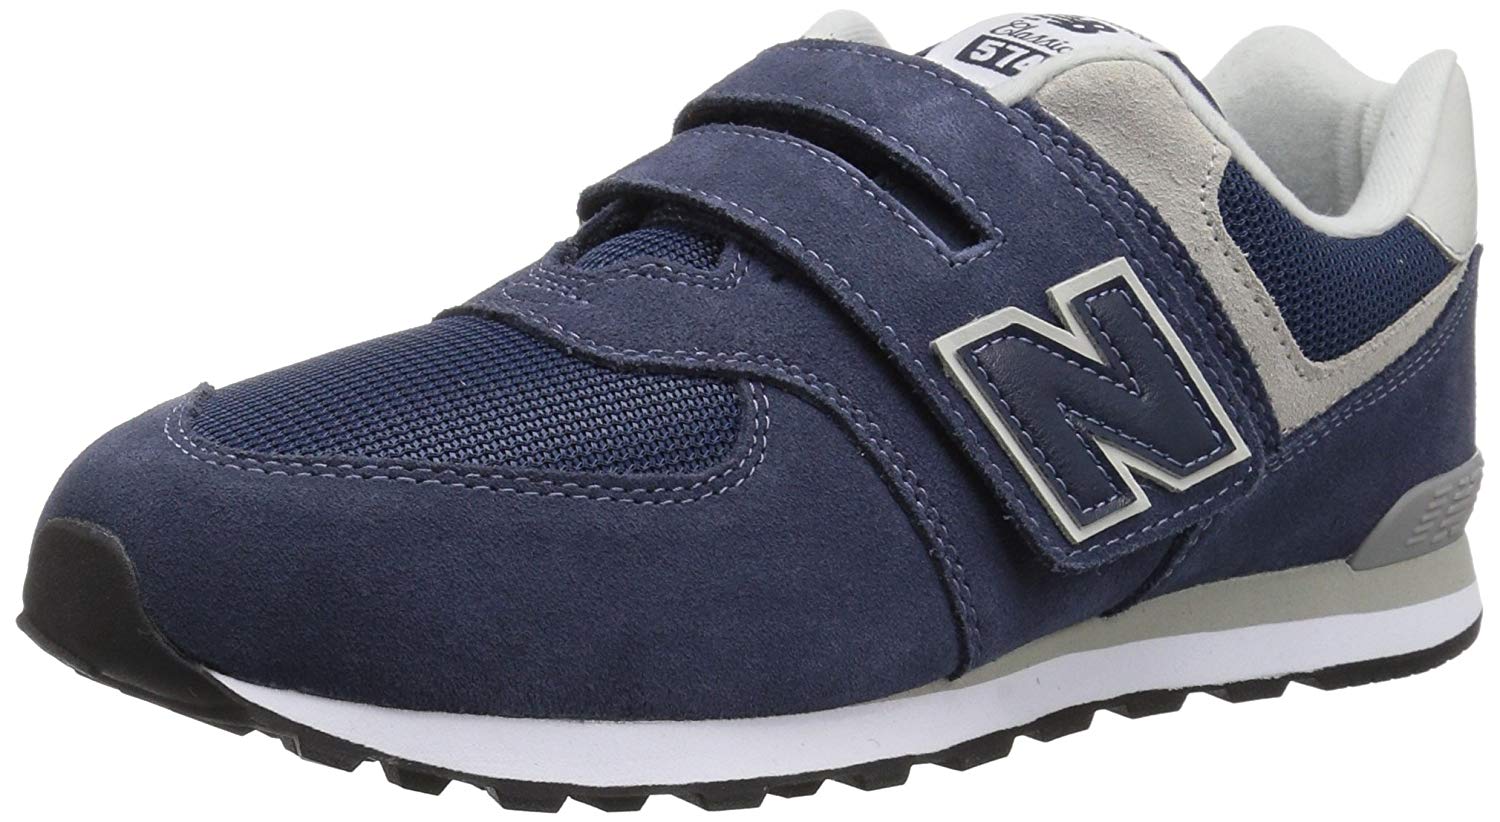 New Balance Baby Boy iv574gv Fabric Sneakers, navy blue/wht, Size 9.5 ...